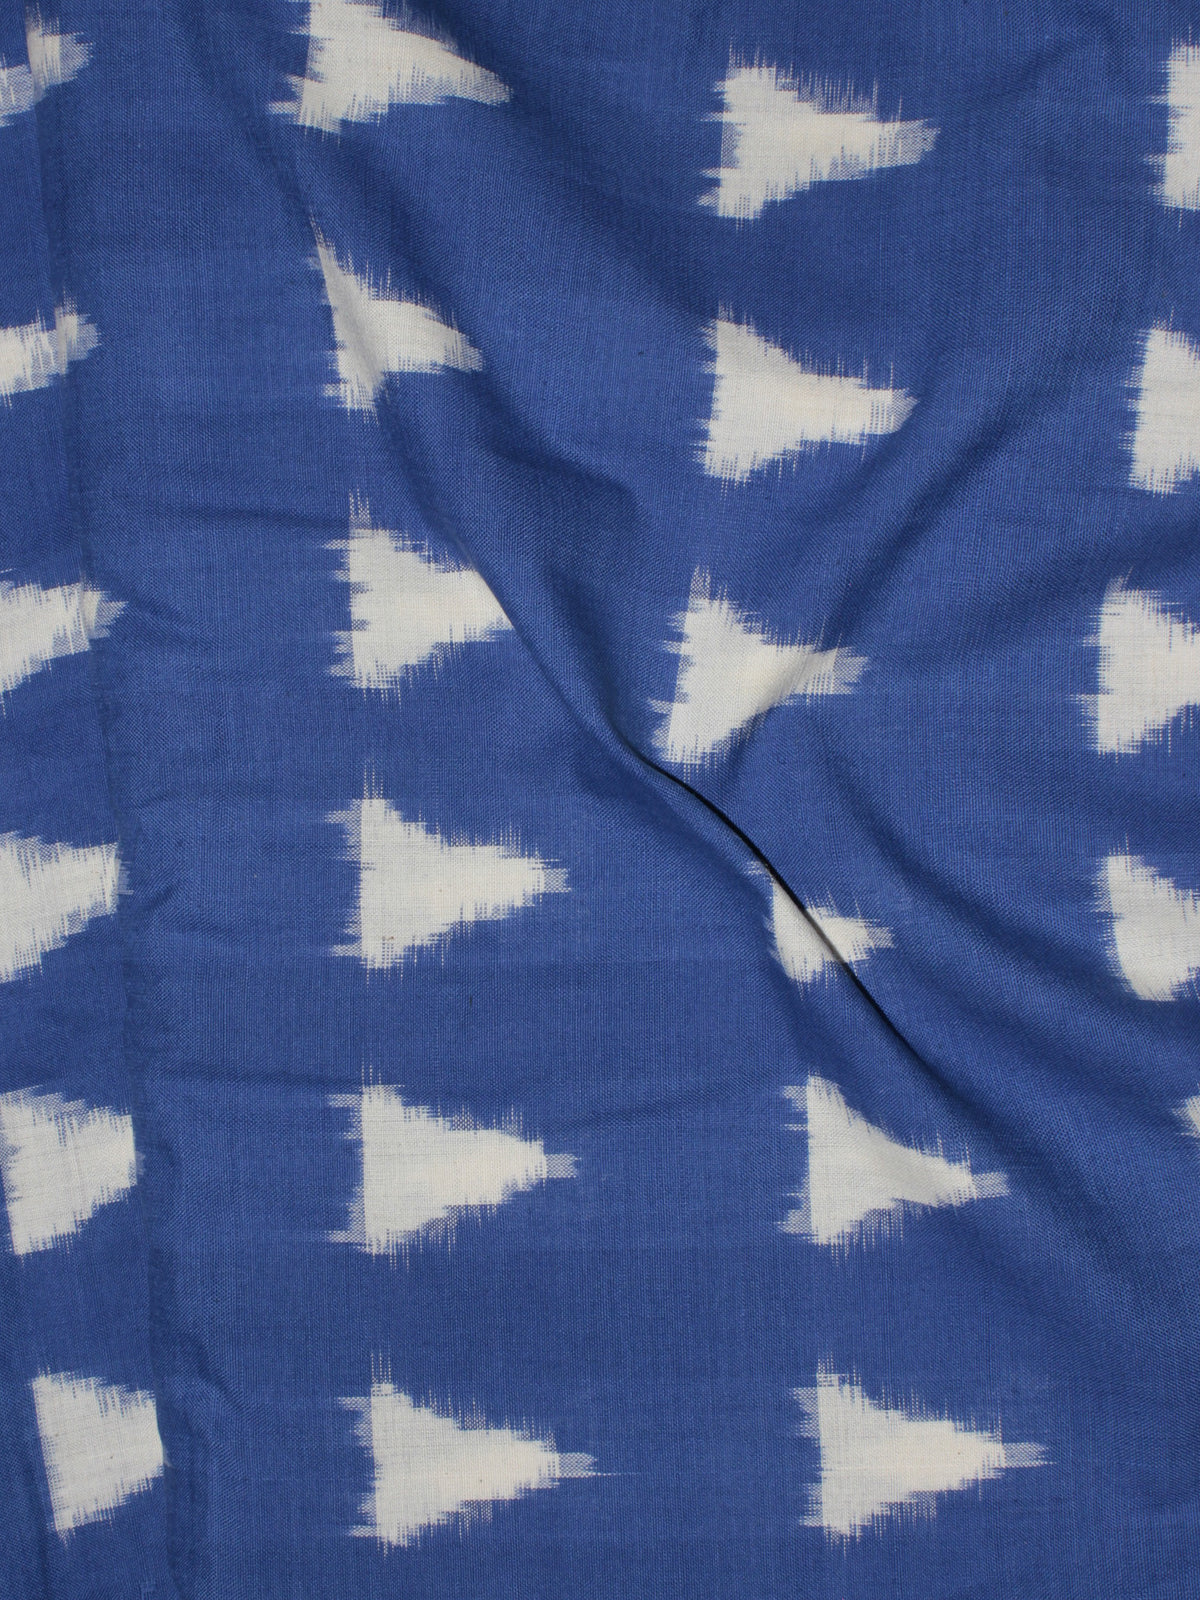 Cobalt Blue Ivory Pochampally Hand Weaved Double Ikat Traingular Fabric Per Meter - F0916757